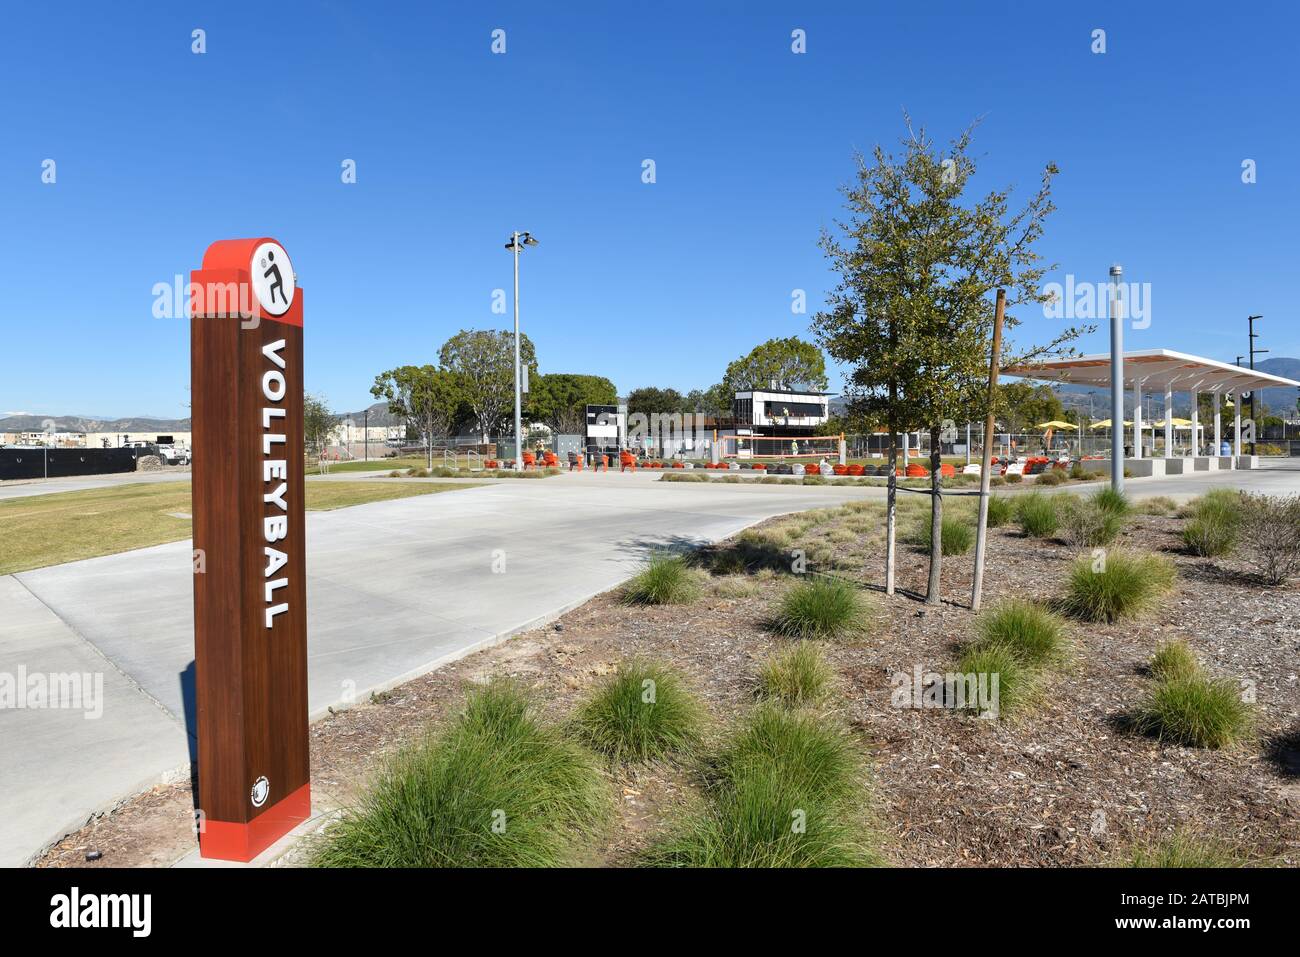 IRVINE, CALIFORNIA - 31 JAN 2020: Sand Volleyball stadium court at the Orange County Great Park. Stock Photo